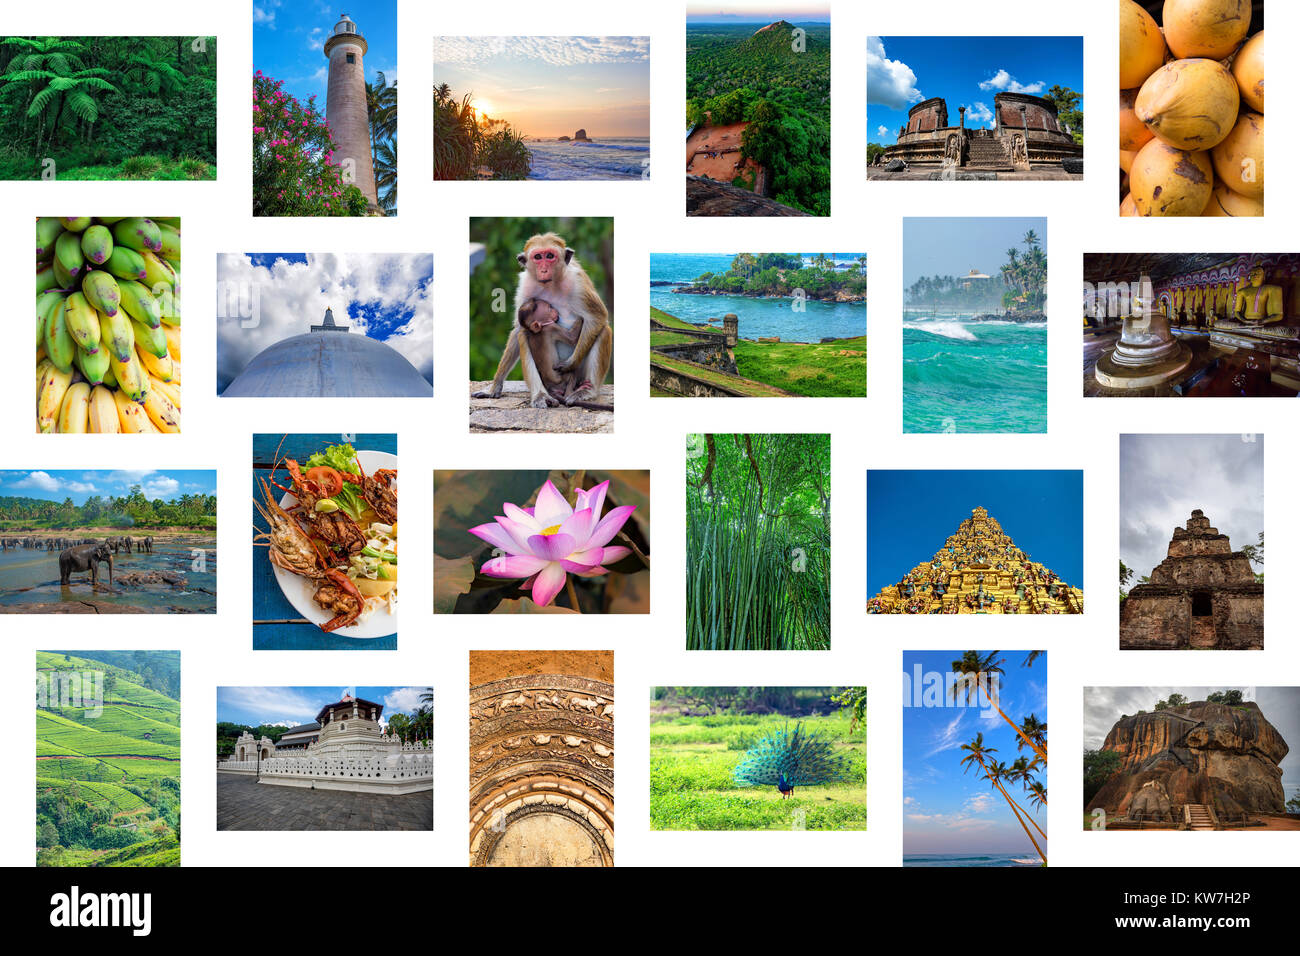 Sri Lanka travel concept collage Banque D'Images